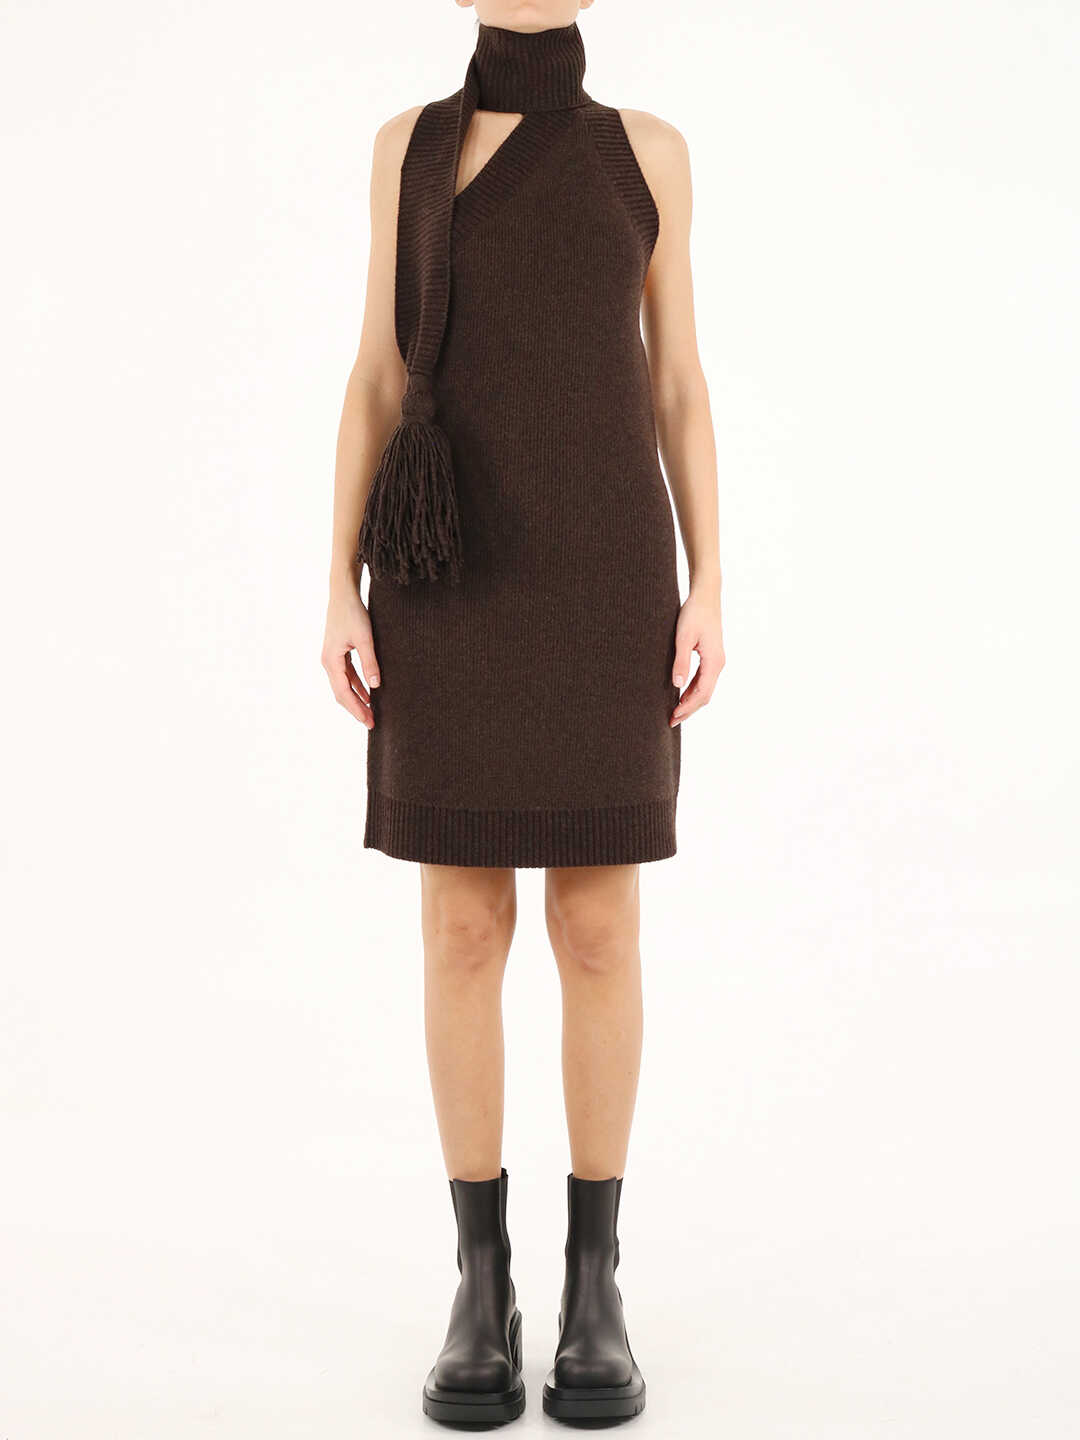 Bottega Veneta One Shoulder Dress Brown image0